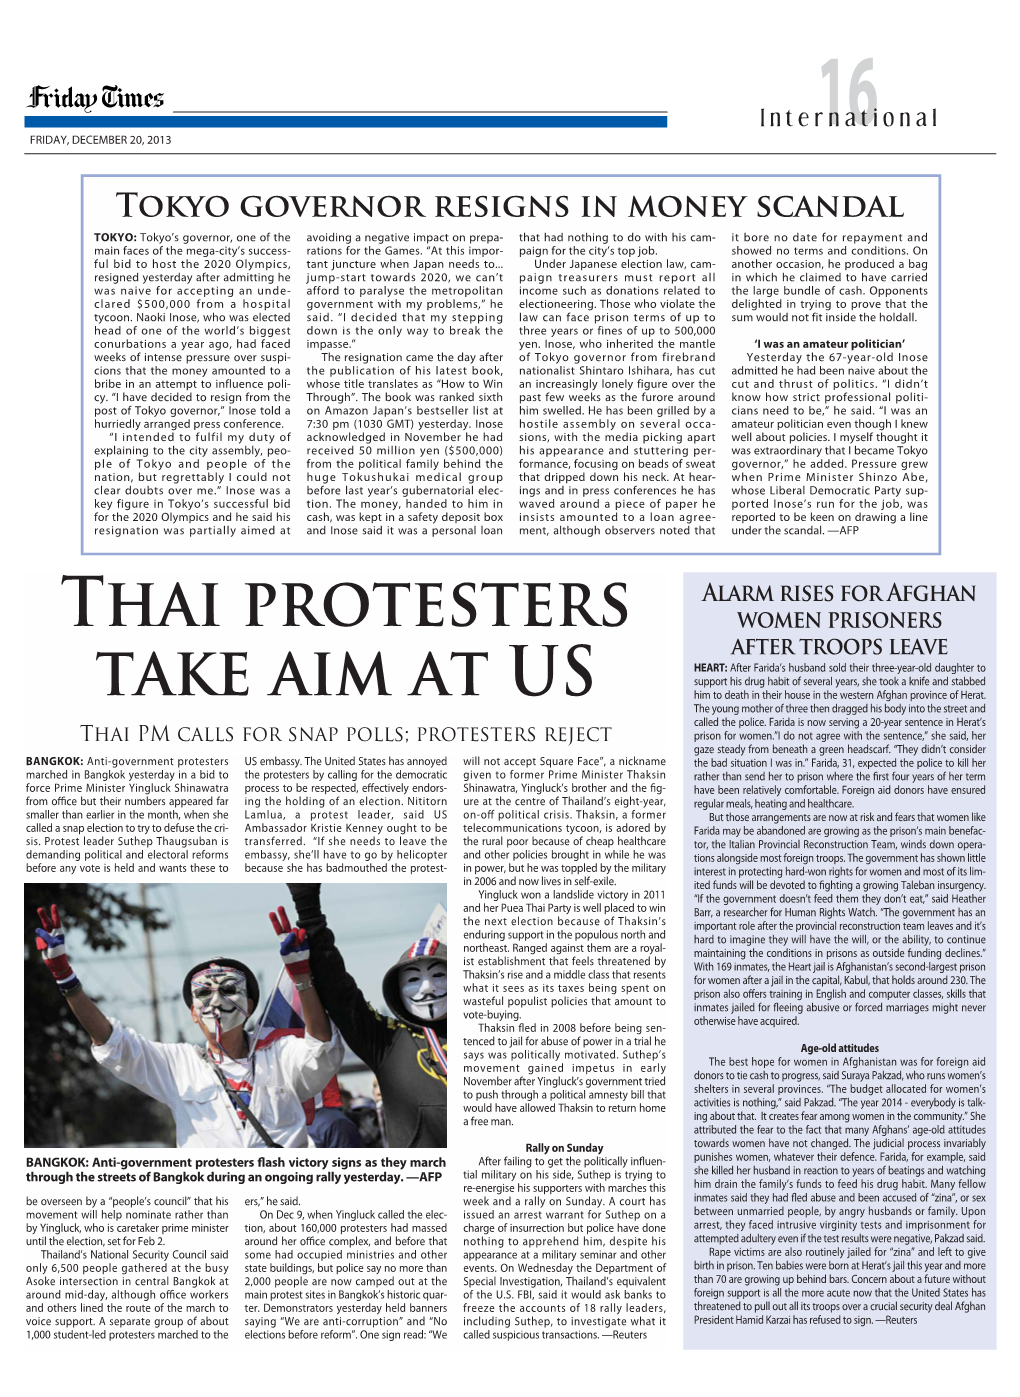 Thai PROTESTERS TAKE Aim at US